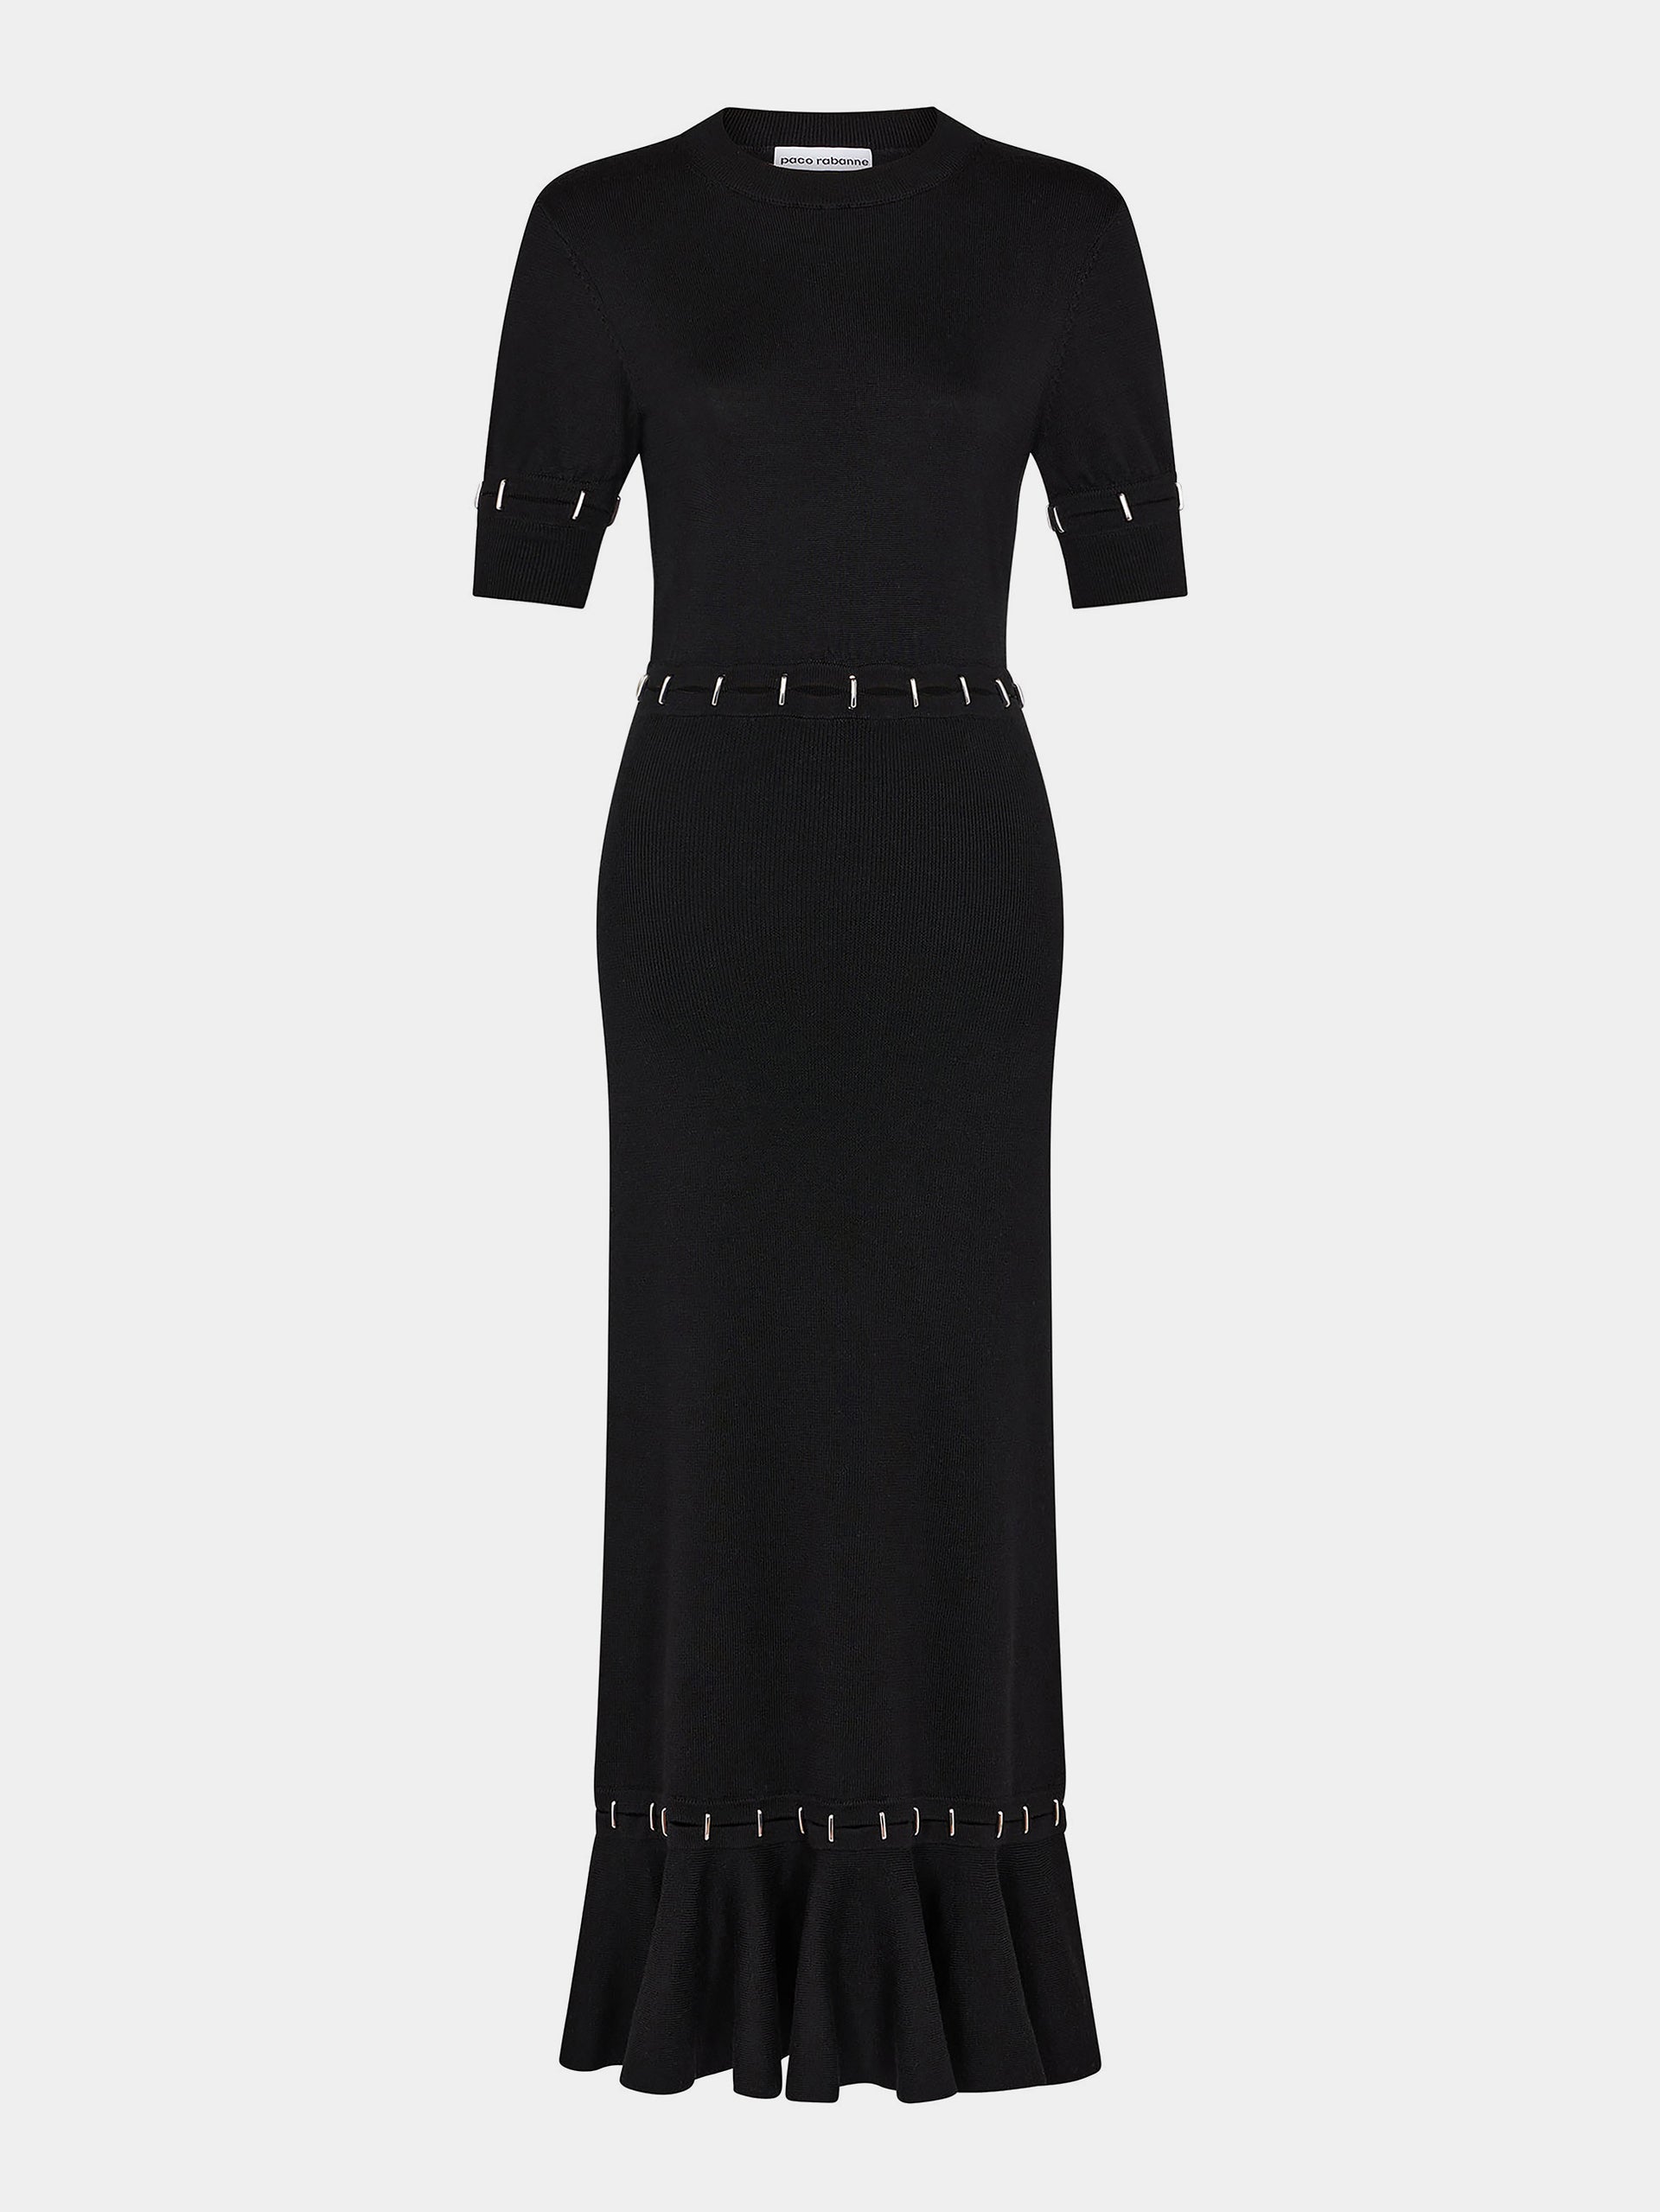 Long black dress with metallic details